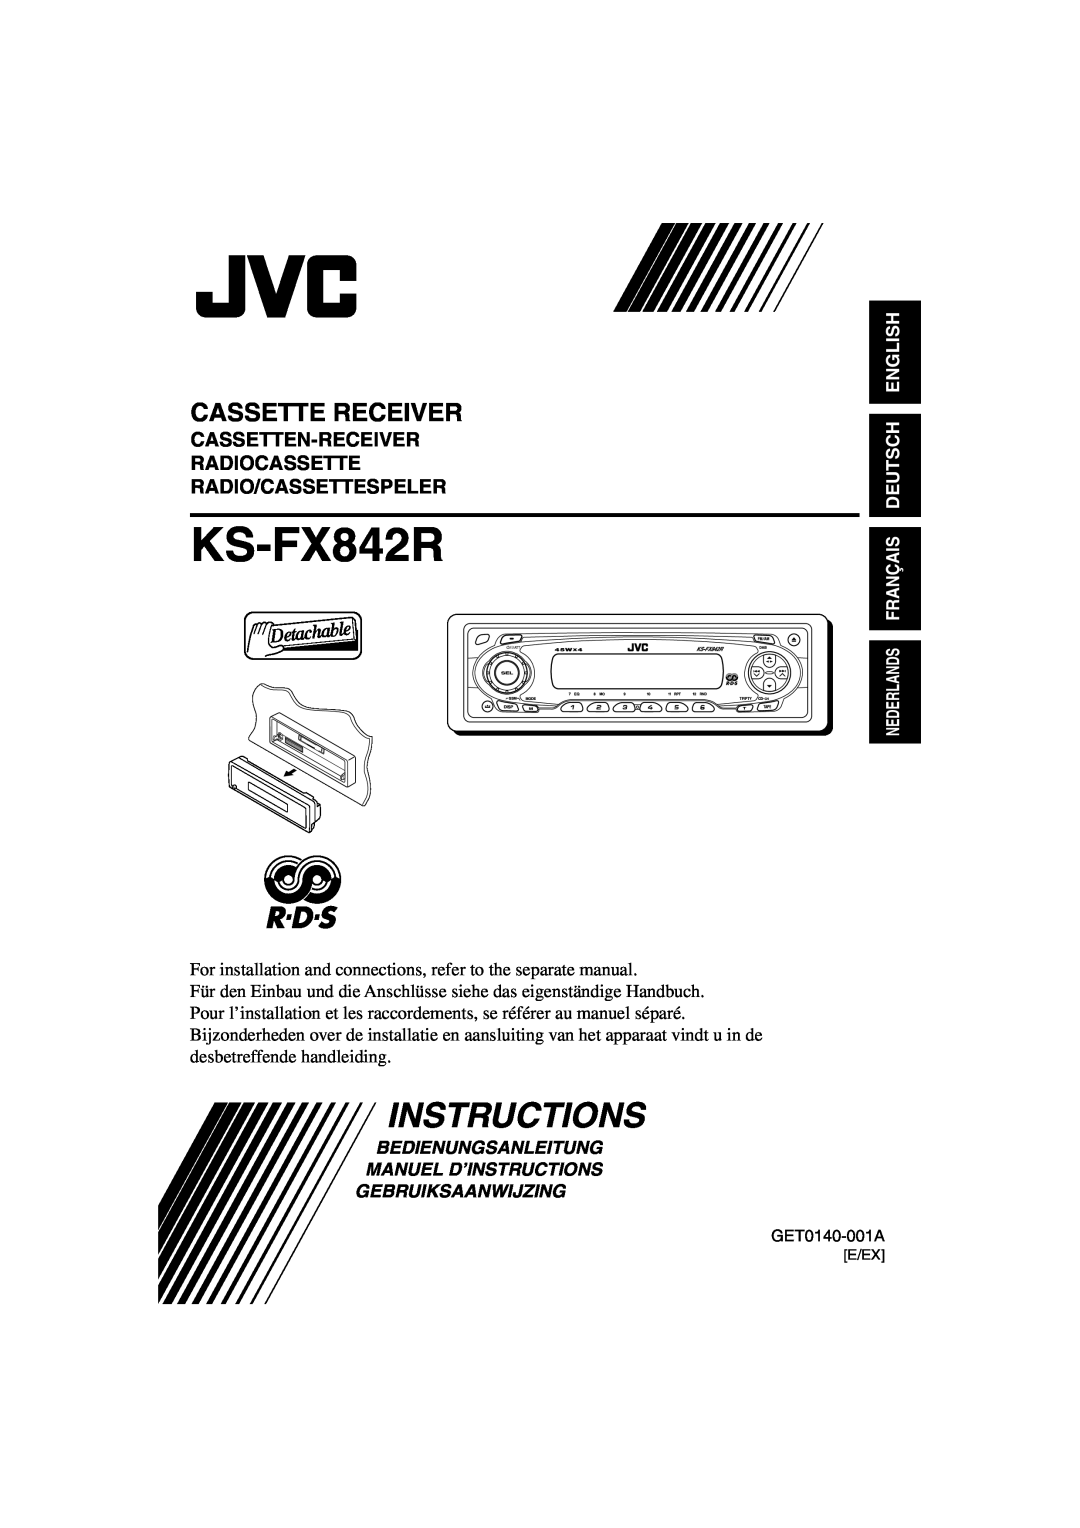 JVC KS-FX842R, GET0140-001A manual Cassette Receiver, Cassetten-Receiver Radiocassette Radio/Cassettespeler, Instructions 